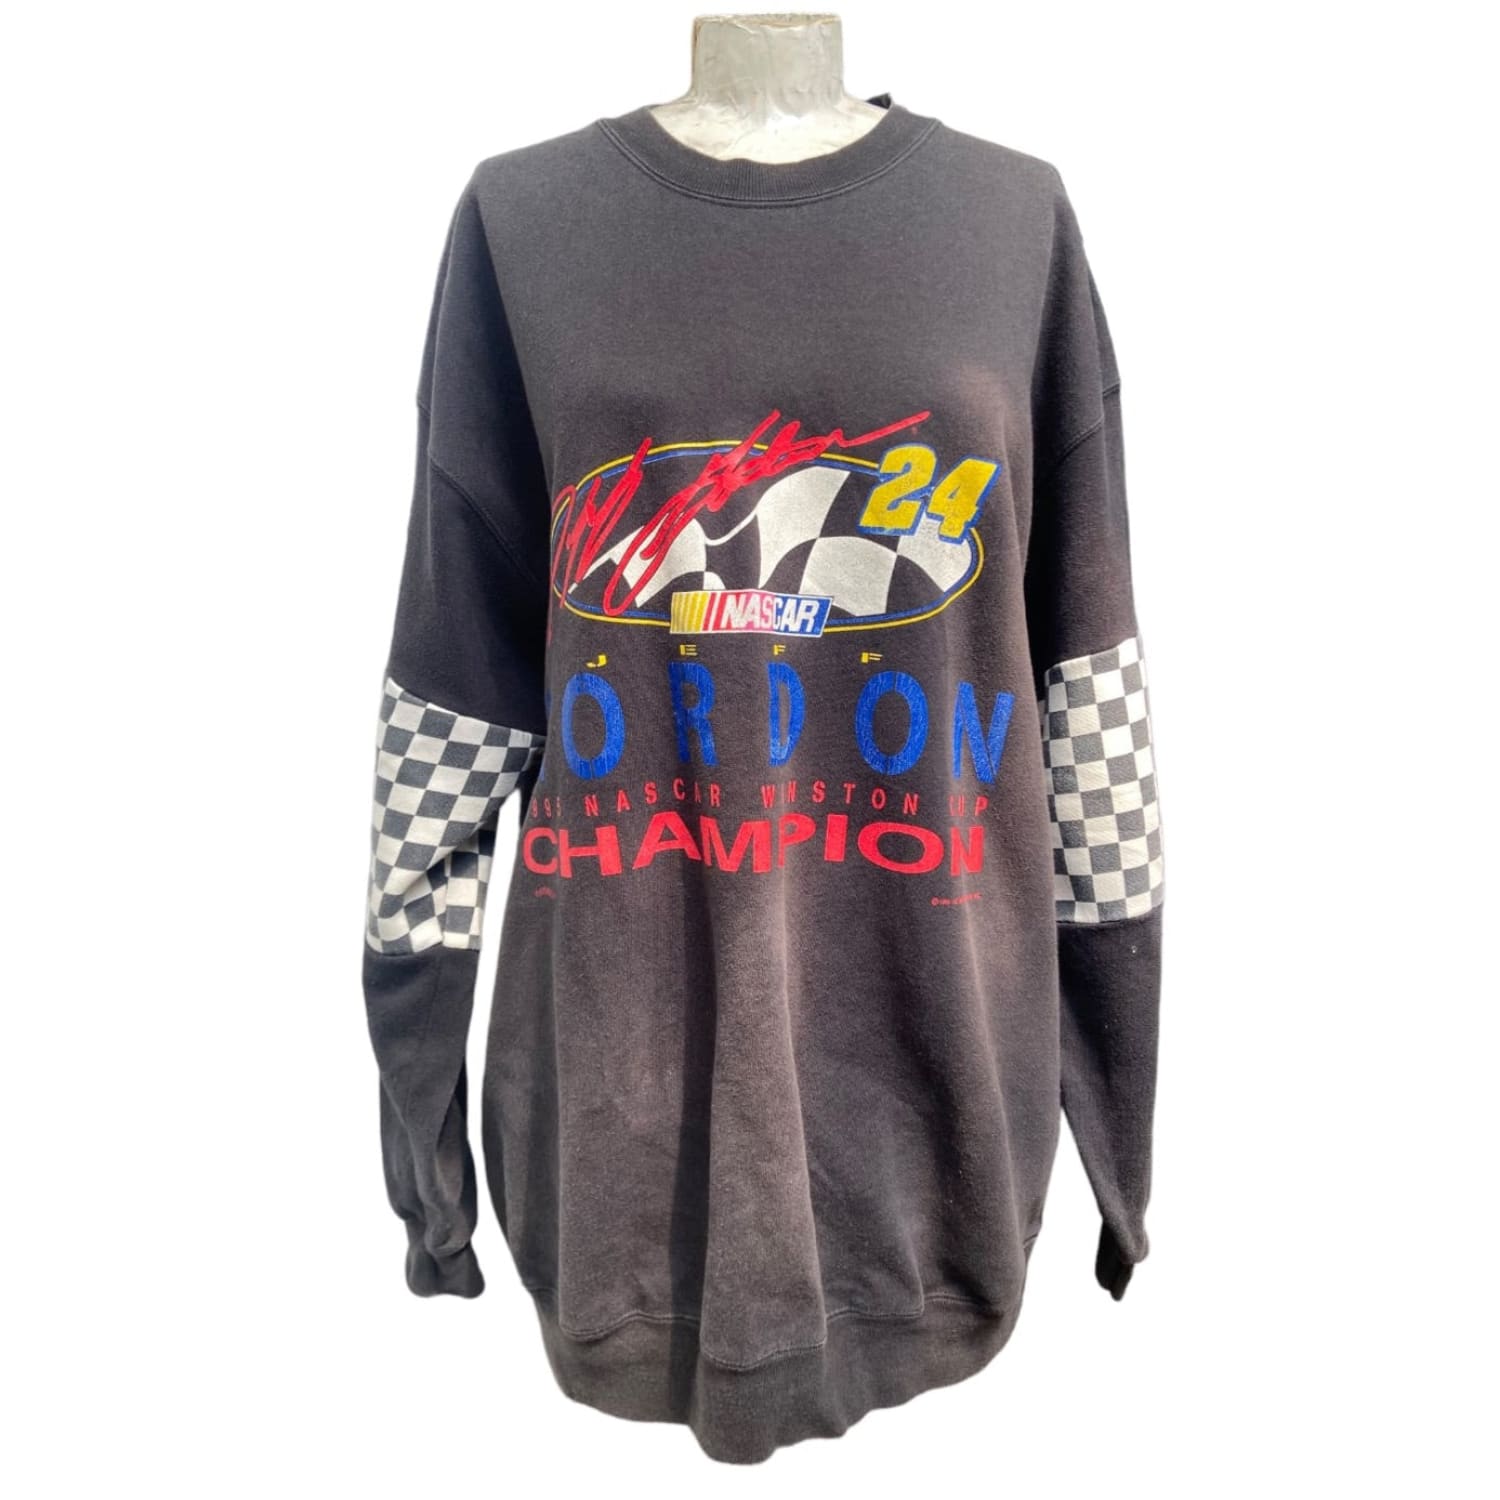 Vintage Nascar Gordon Racing Pullover Sweatshirt Vintage -